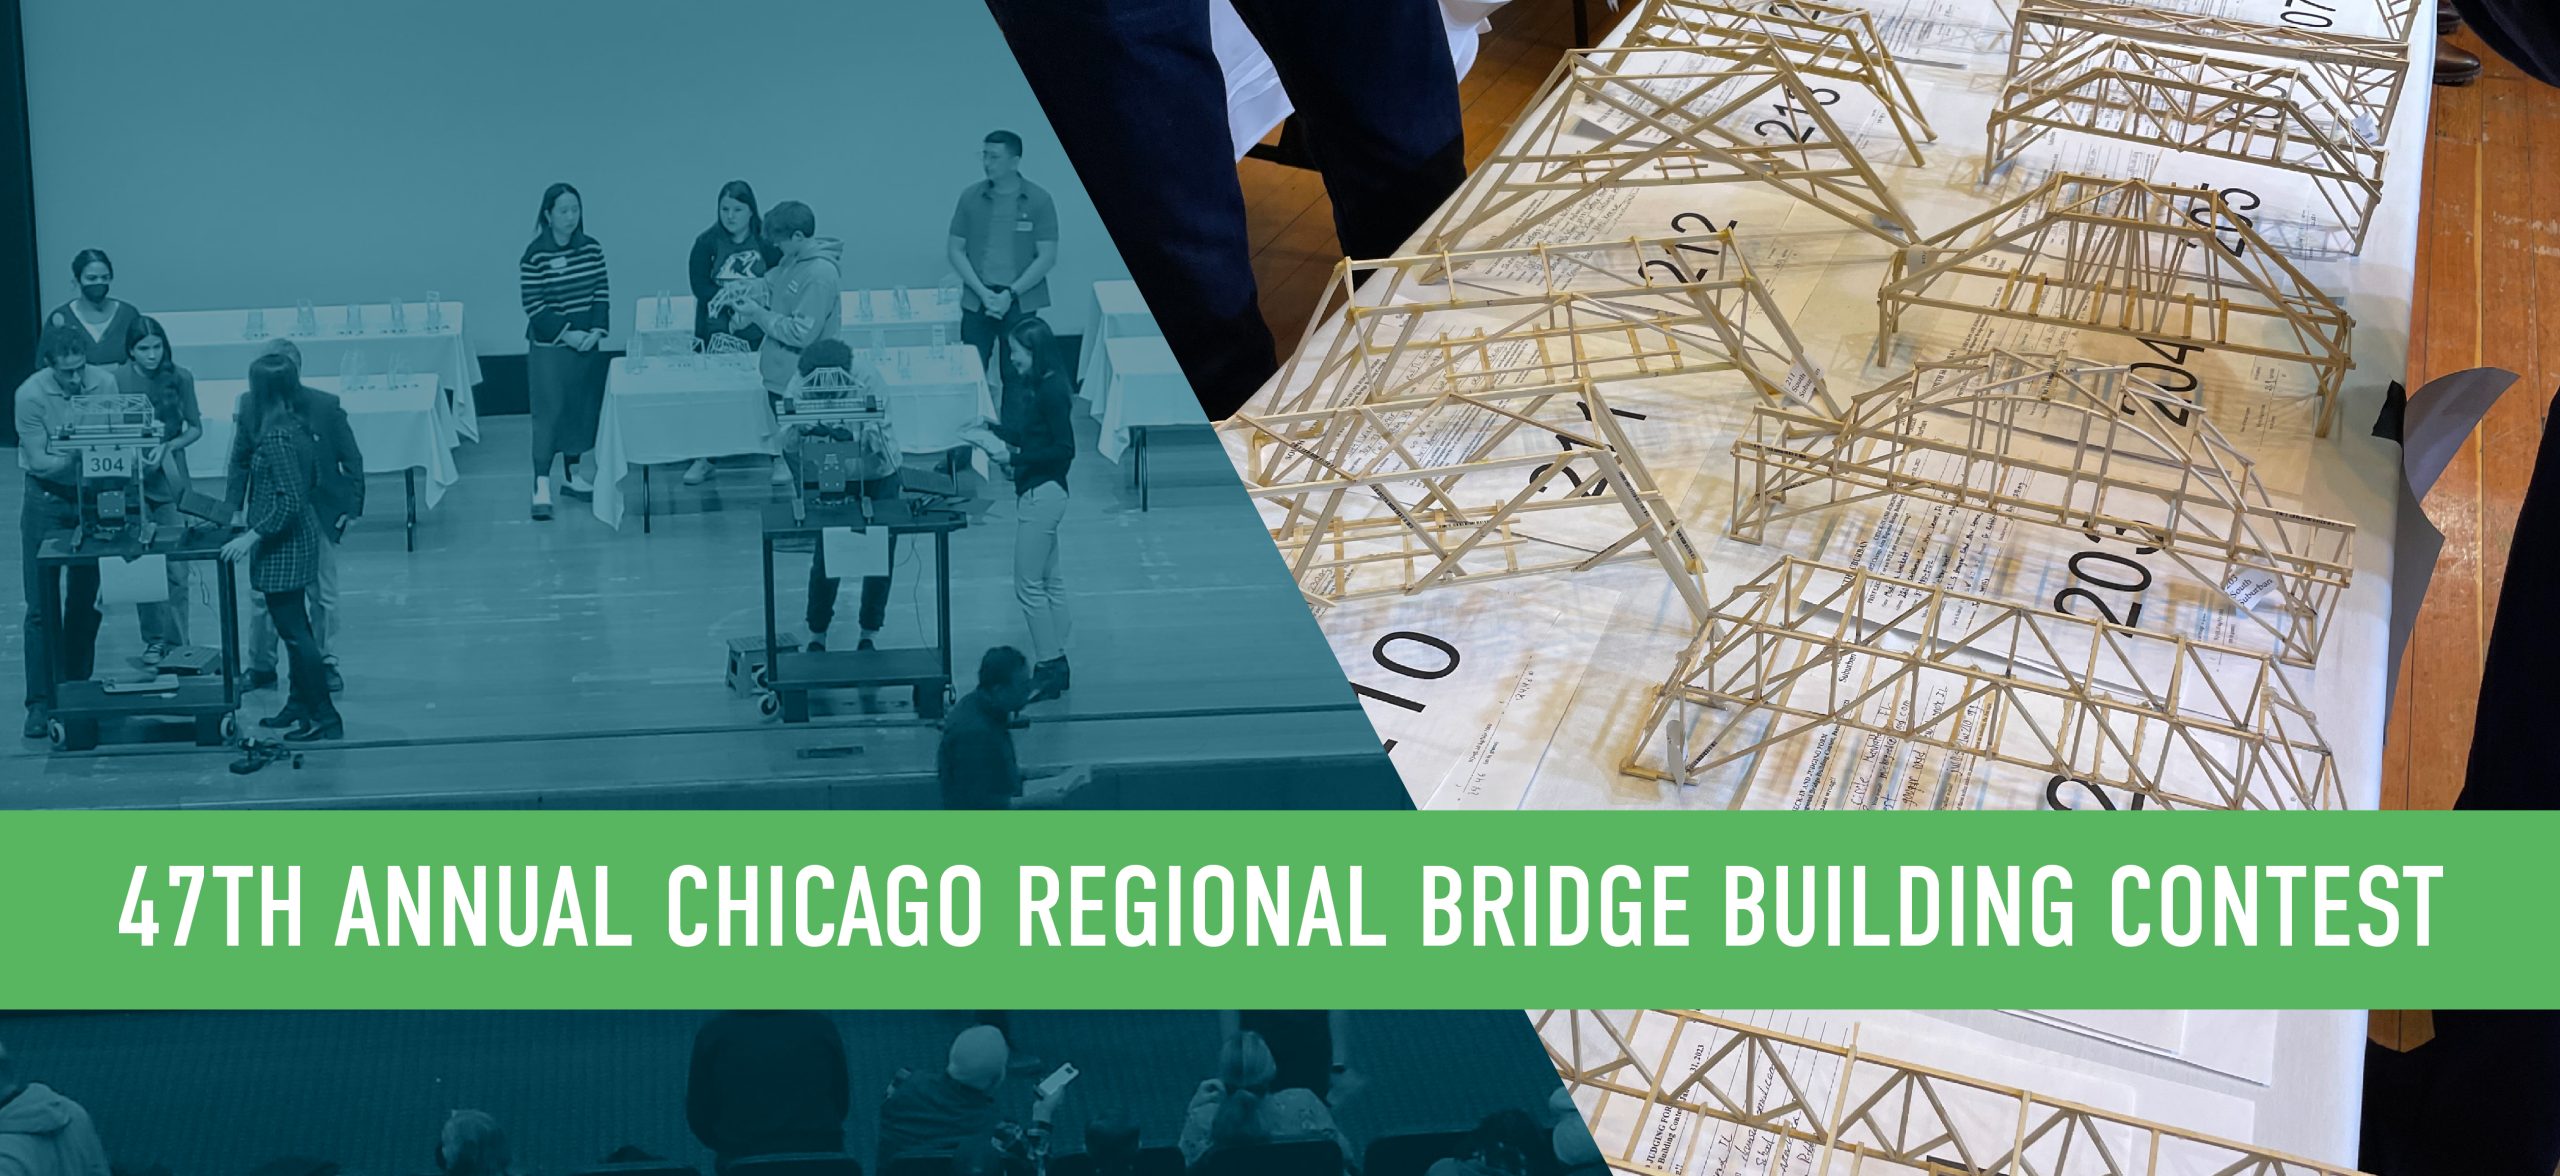 Structural Design Engineer Helps Judge Chicago Regional Bridge Building Contest